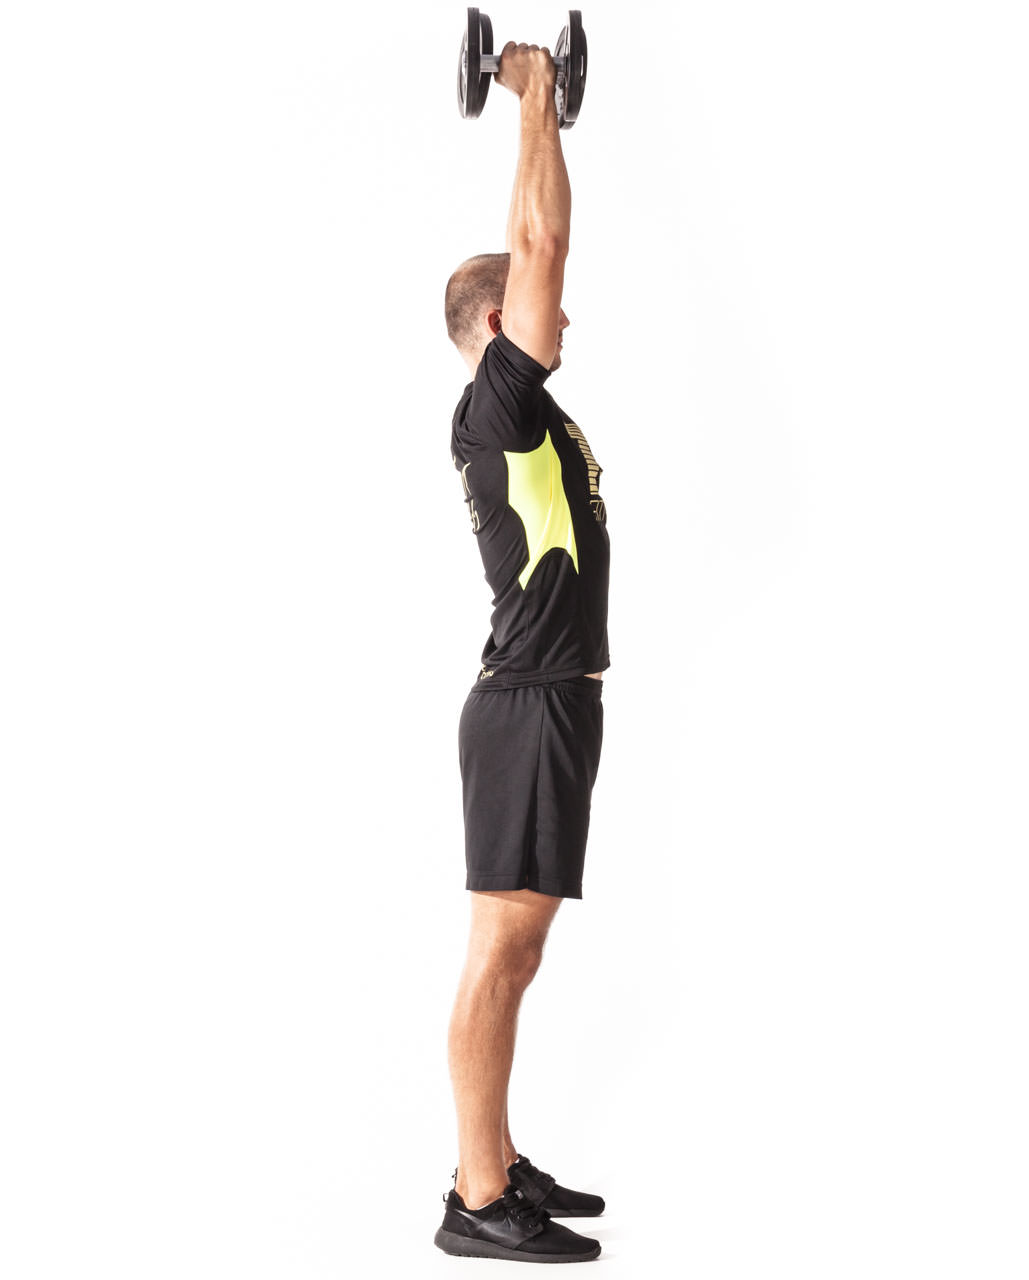 Standing Dumbbell Triceps Extension frame #4